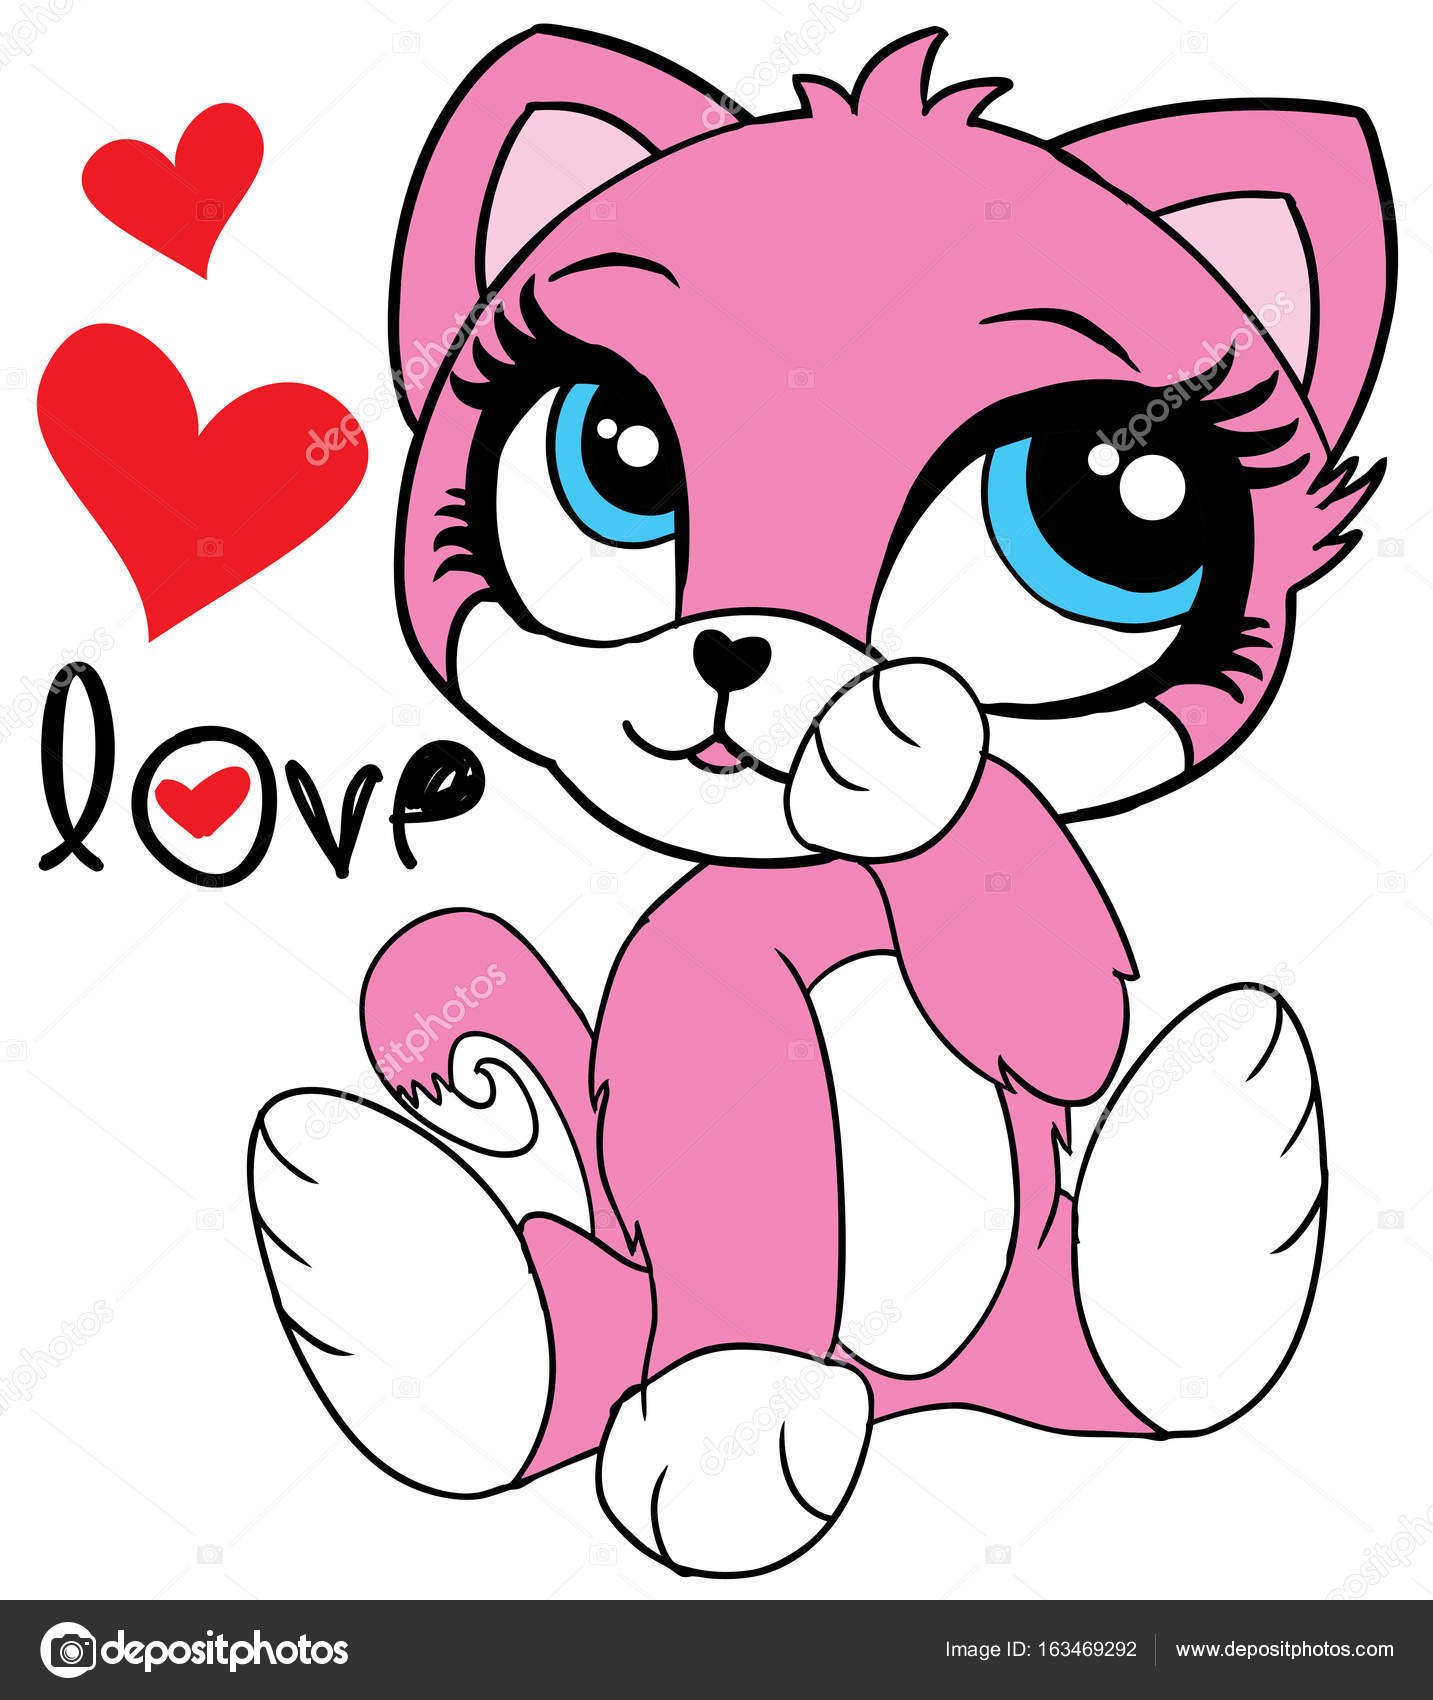 Cute pink cat T-shirt illustration. 